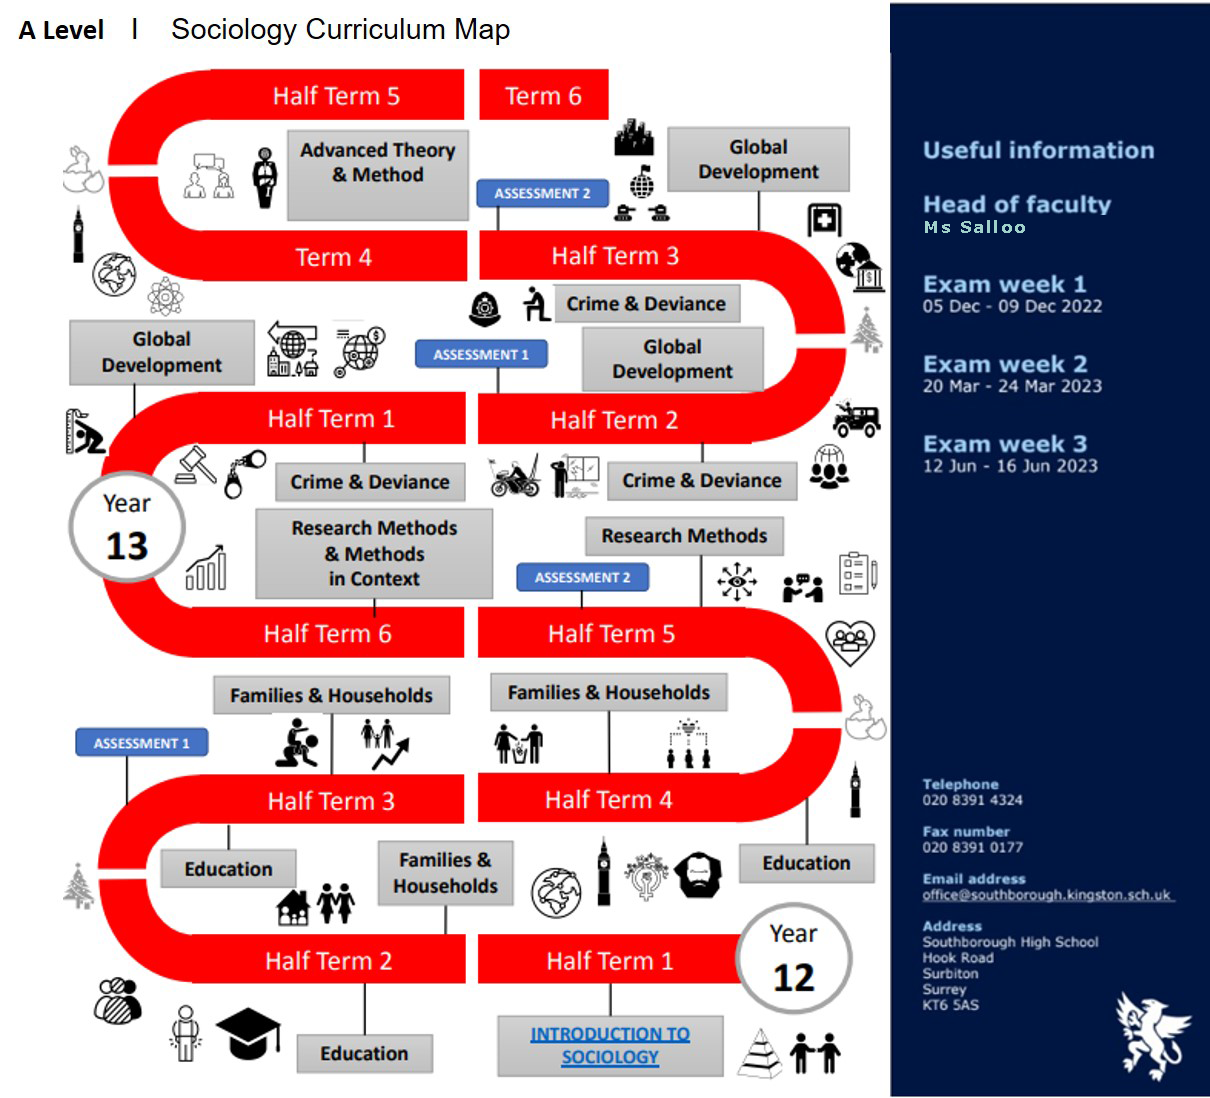 A level sociology curriculum map